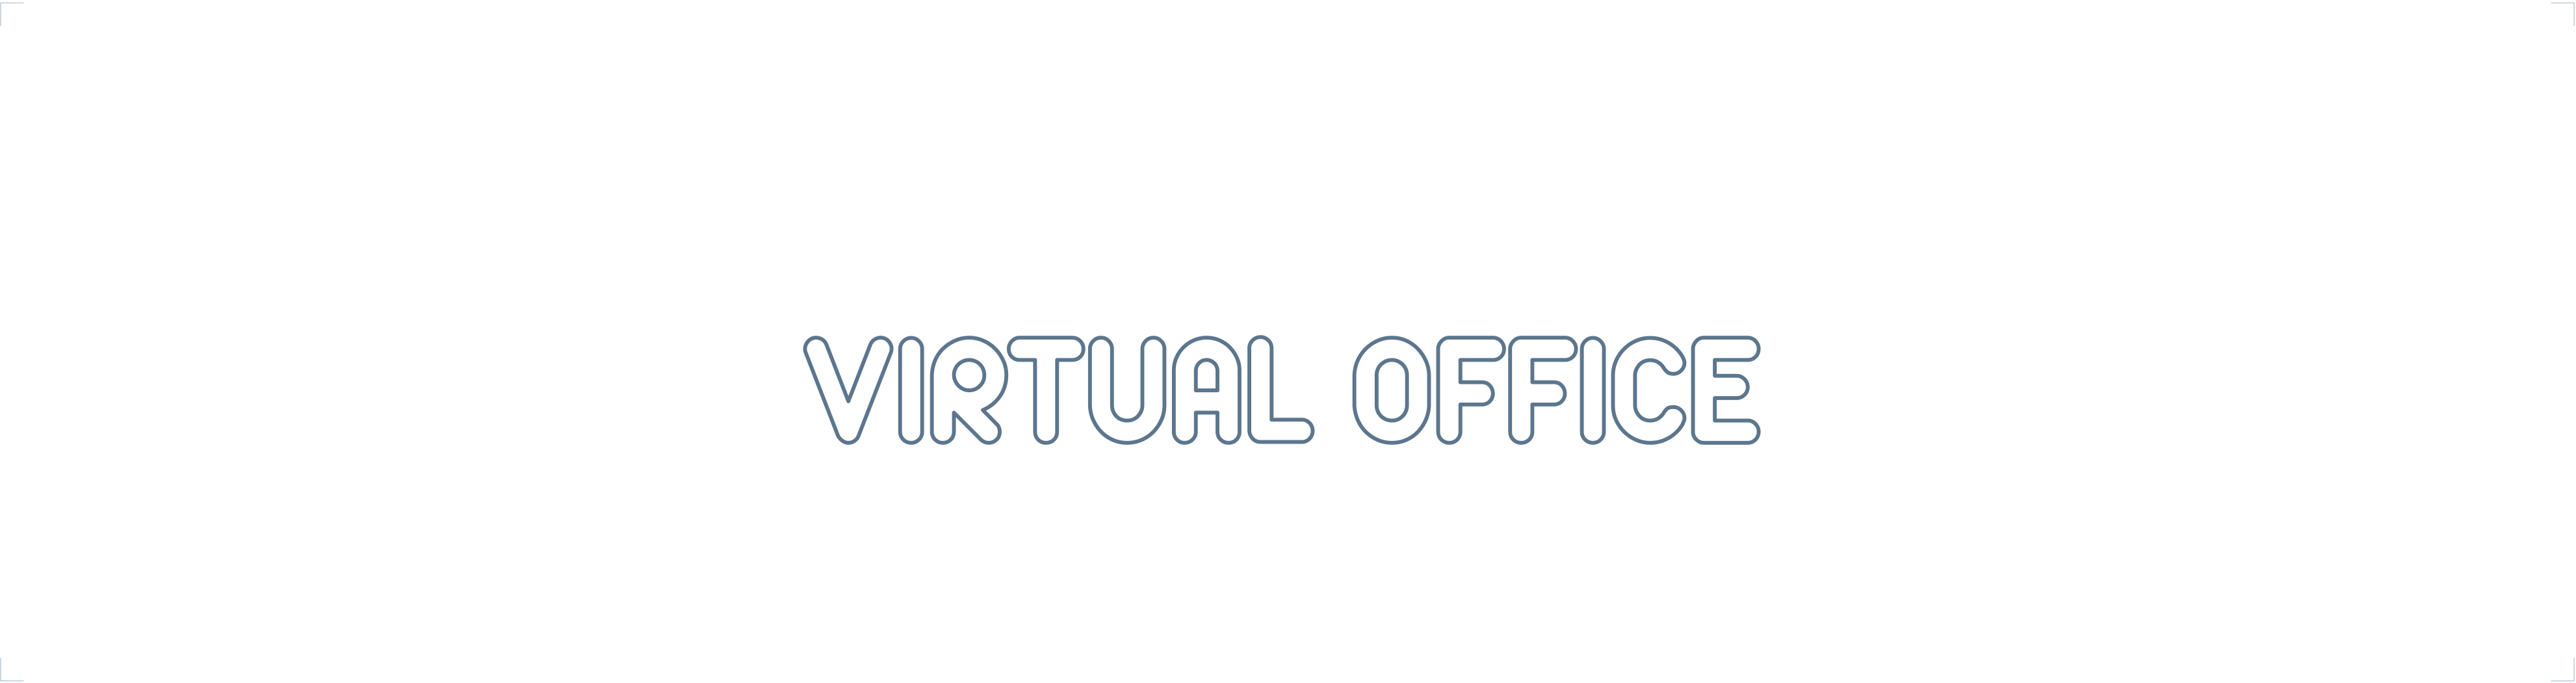 Moja SRO- virtual office